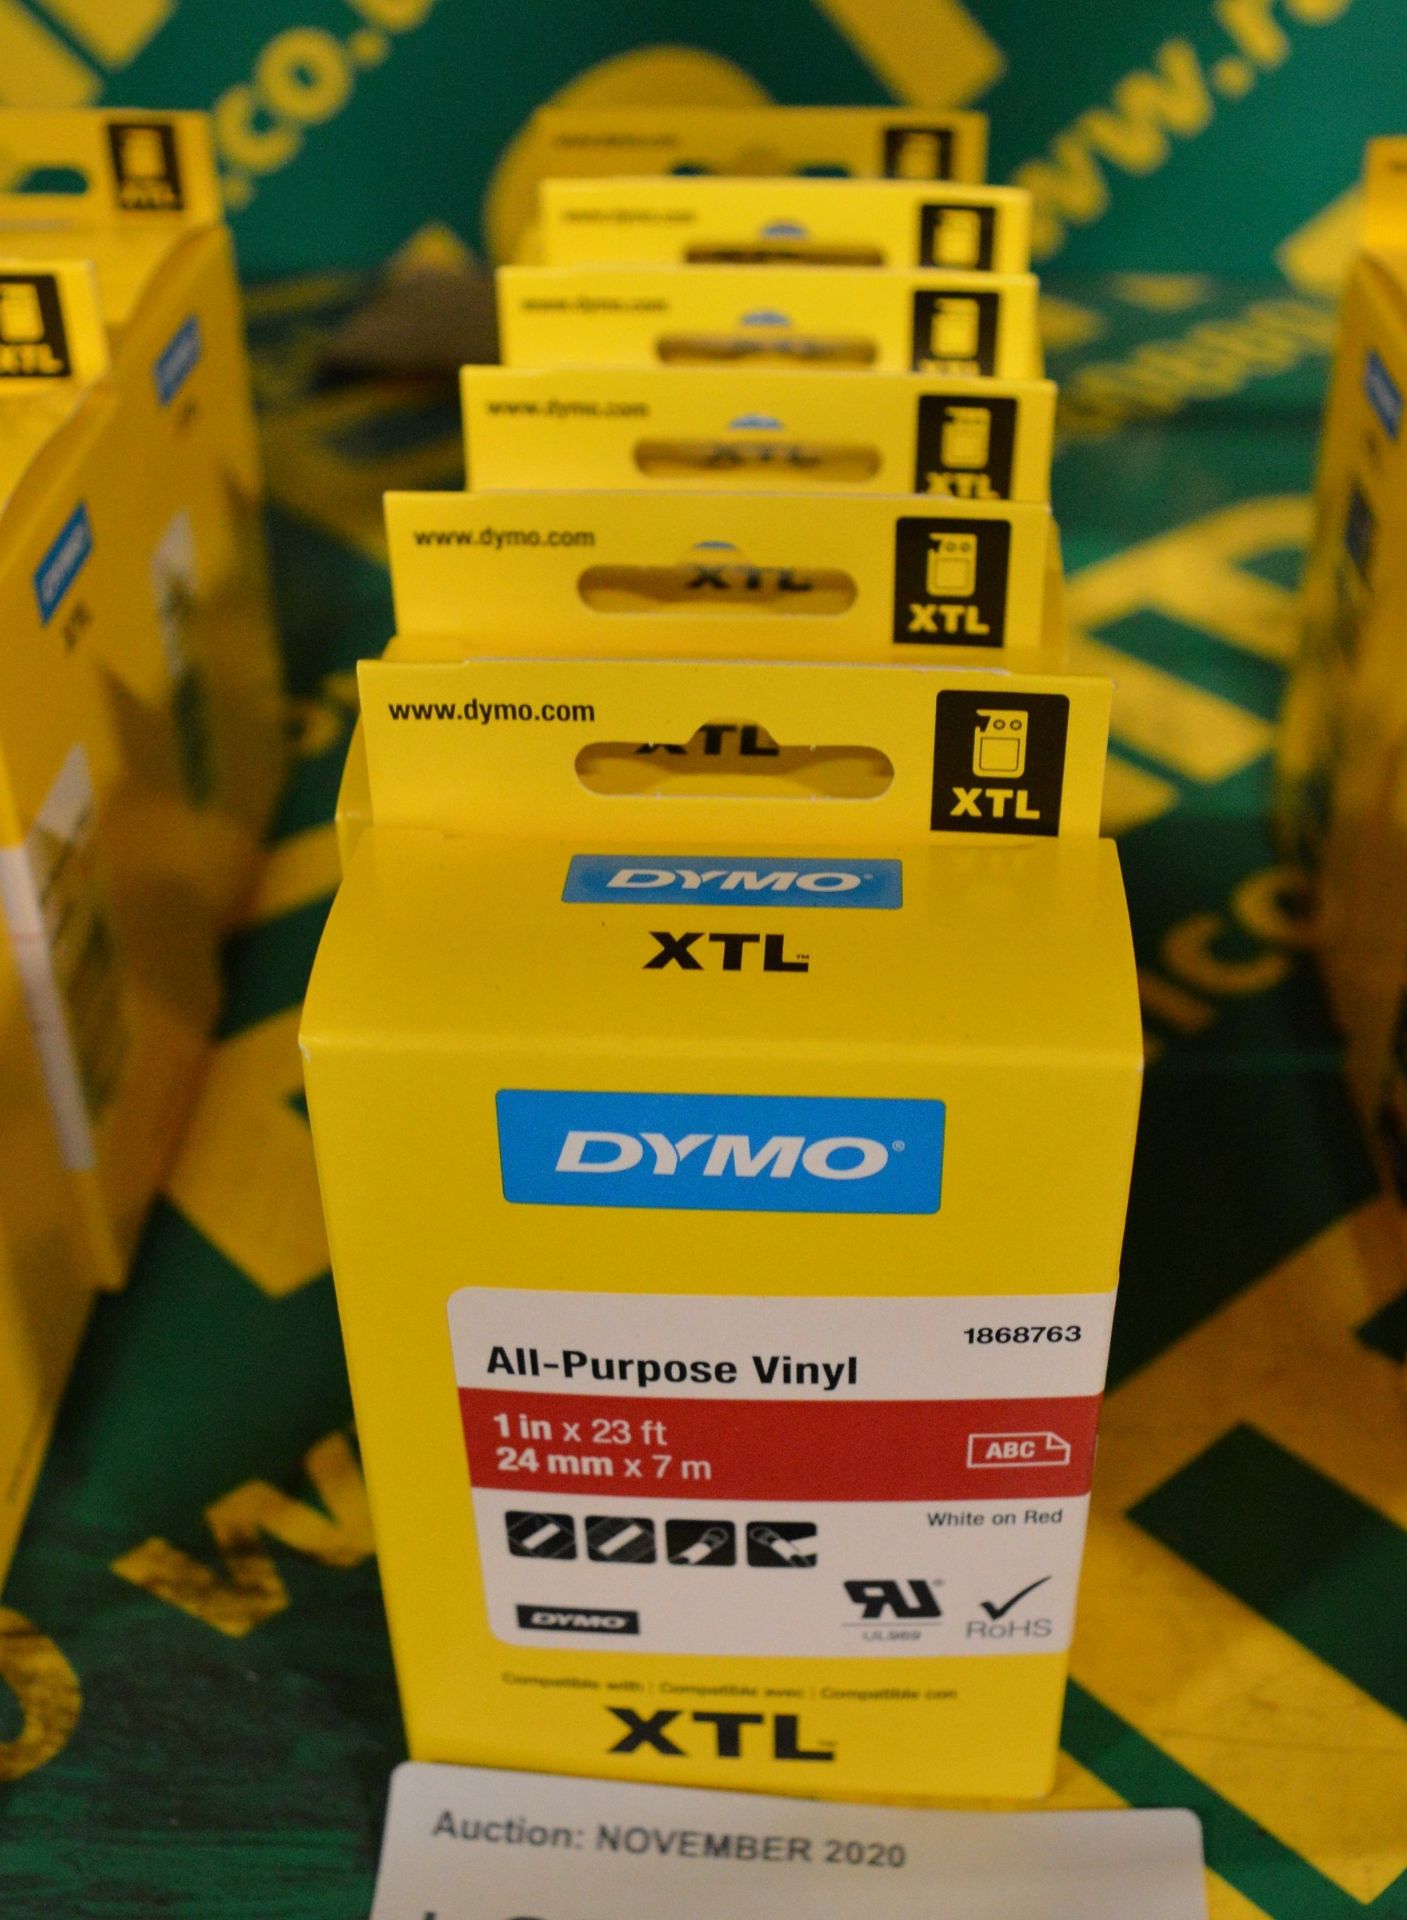 6x Dymo XTL All Purpose Vinyl 1in x 23ft - 24mm x 7m White on Red Printer Tape